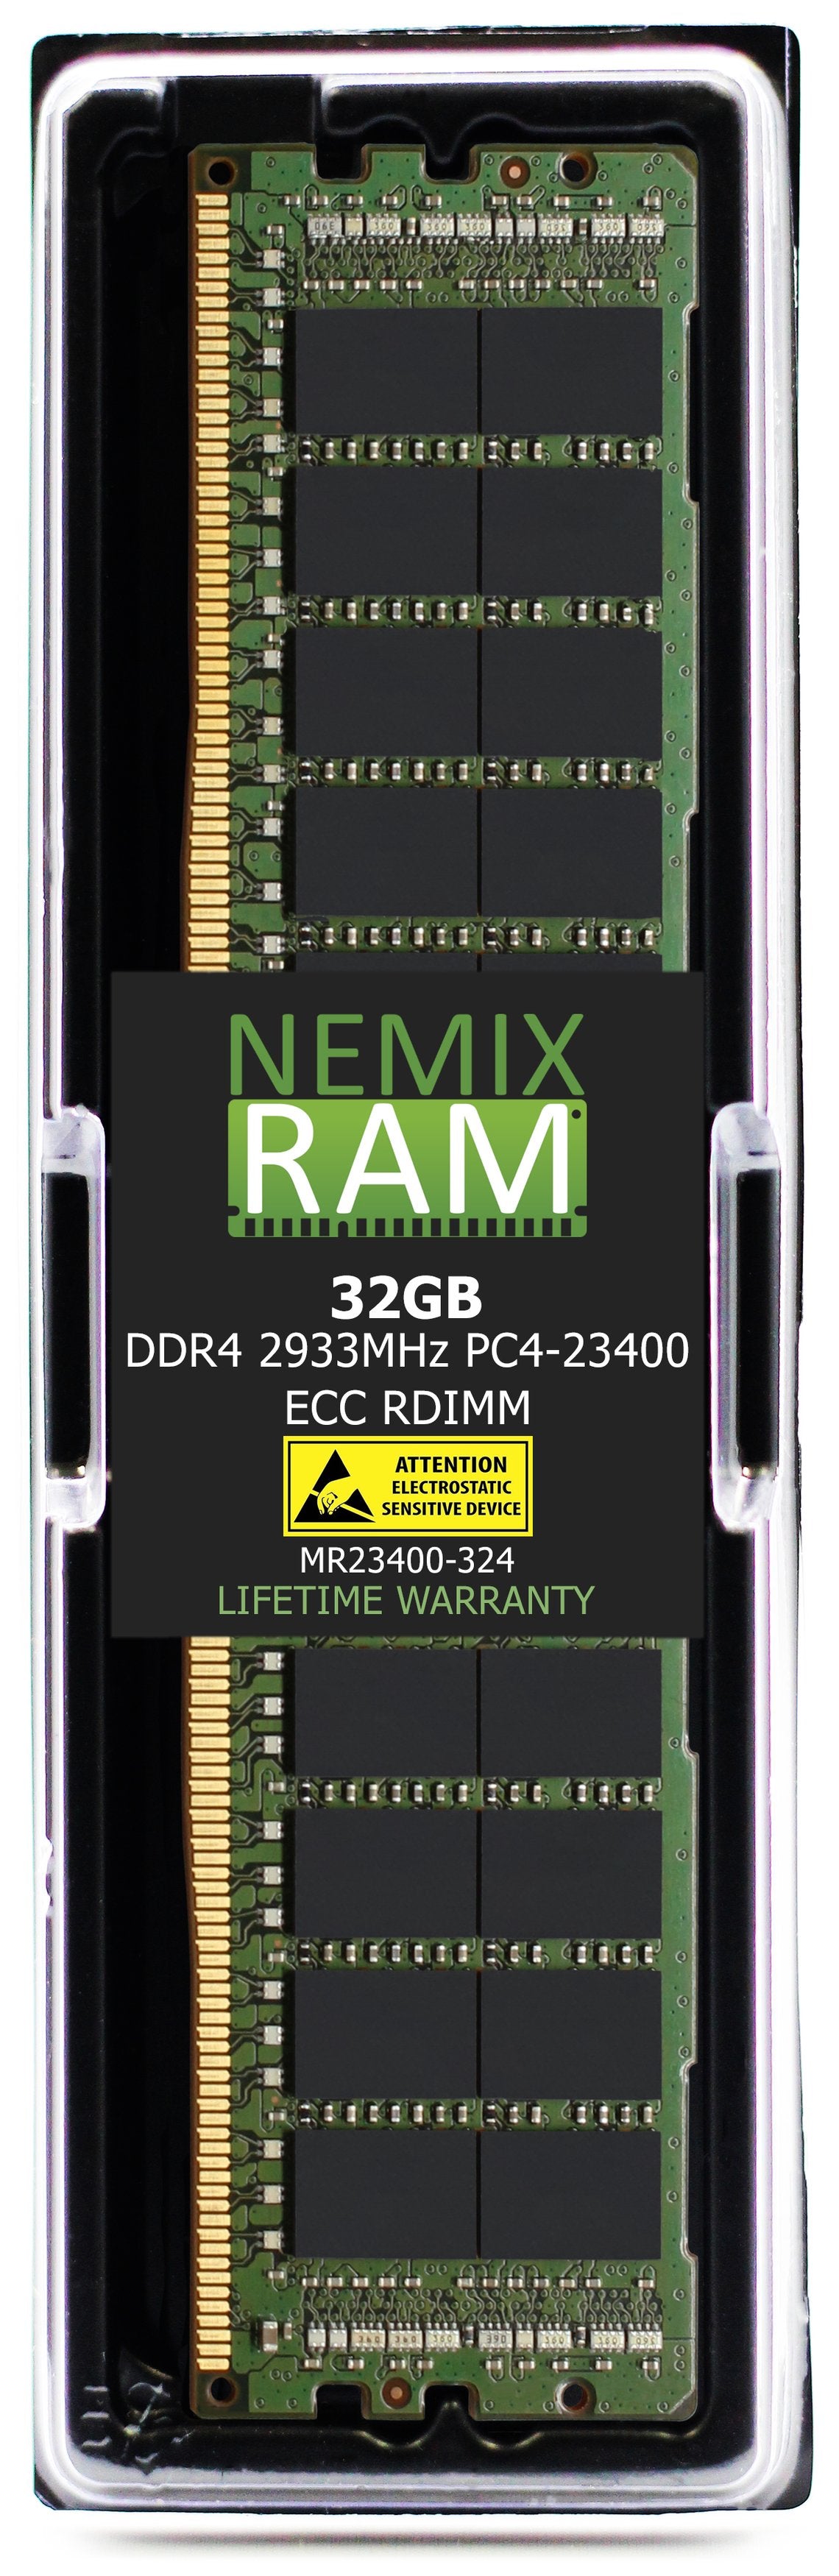 32GB DDR4 2933MHZ PC4-23400 RDIMM Compatible with Supermicro MEM-DR432L-SL01-ER29